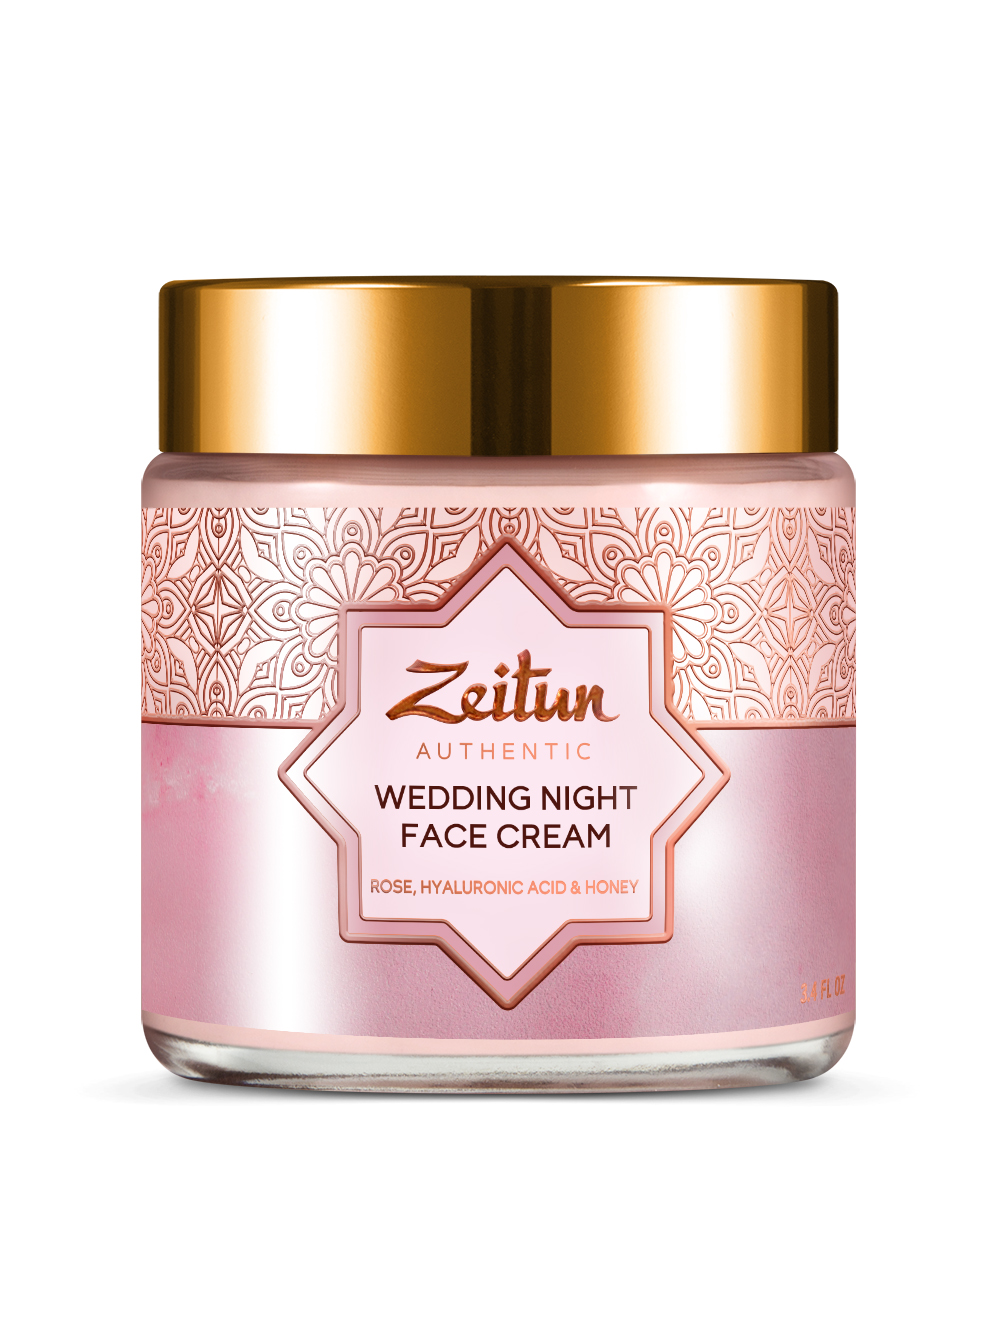 Zeitun Ночной питательный крем Wedding Day, 100 мл (Zeitun, Authentic) дневной крем для лица zeitun wedding day 100 мл